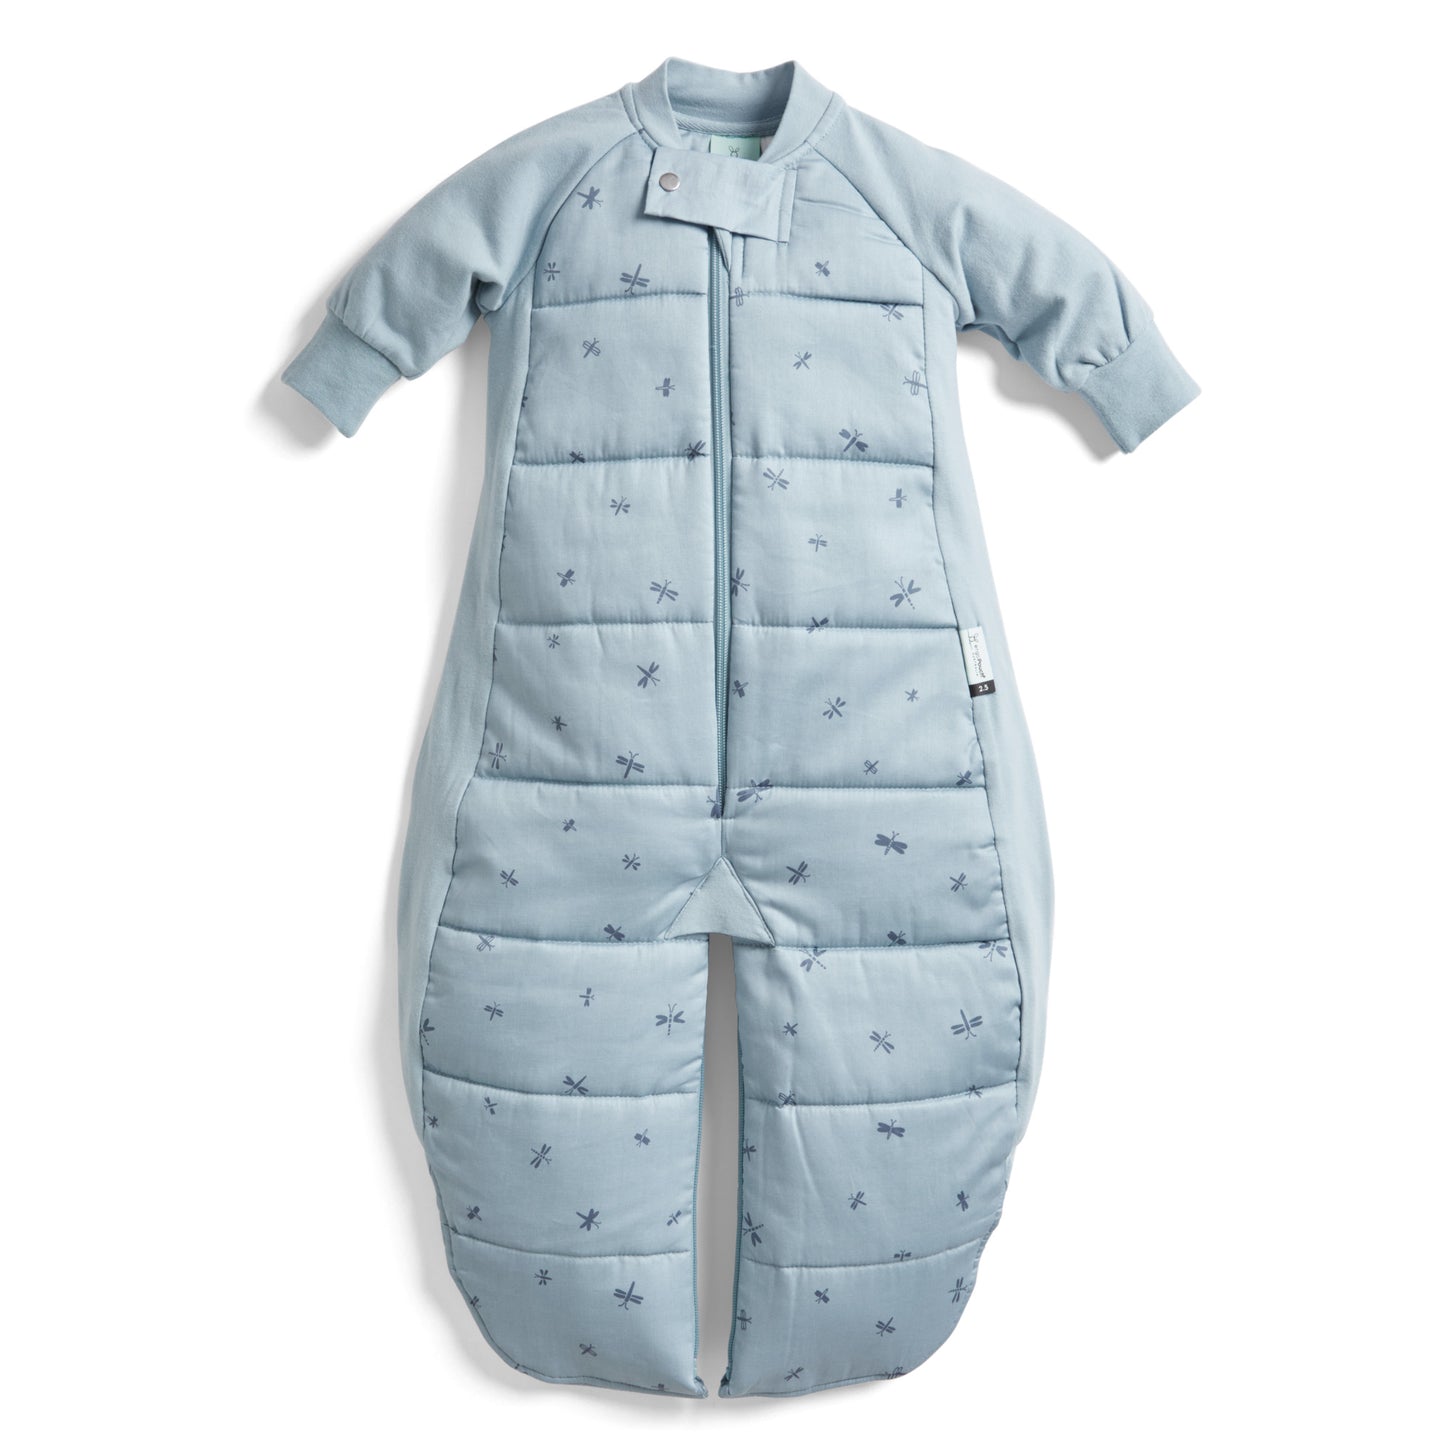 Sleep Suit Bag, 2.5 tog, Dragonflies, 8-24 months